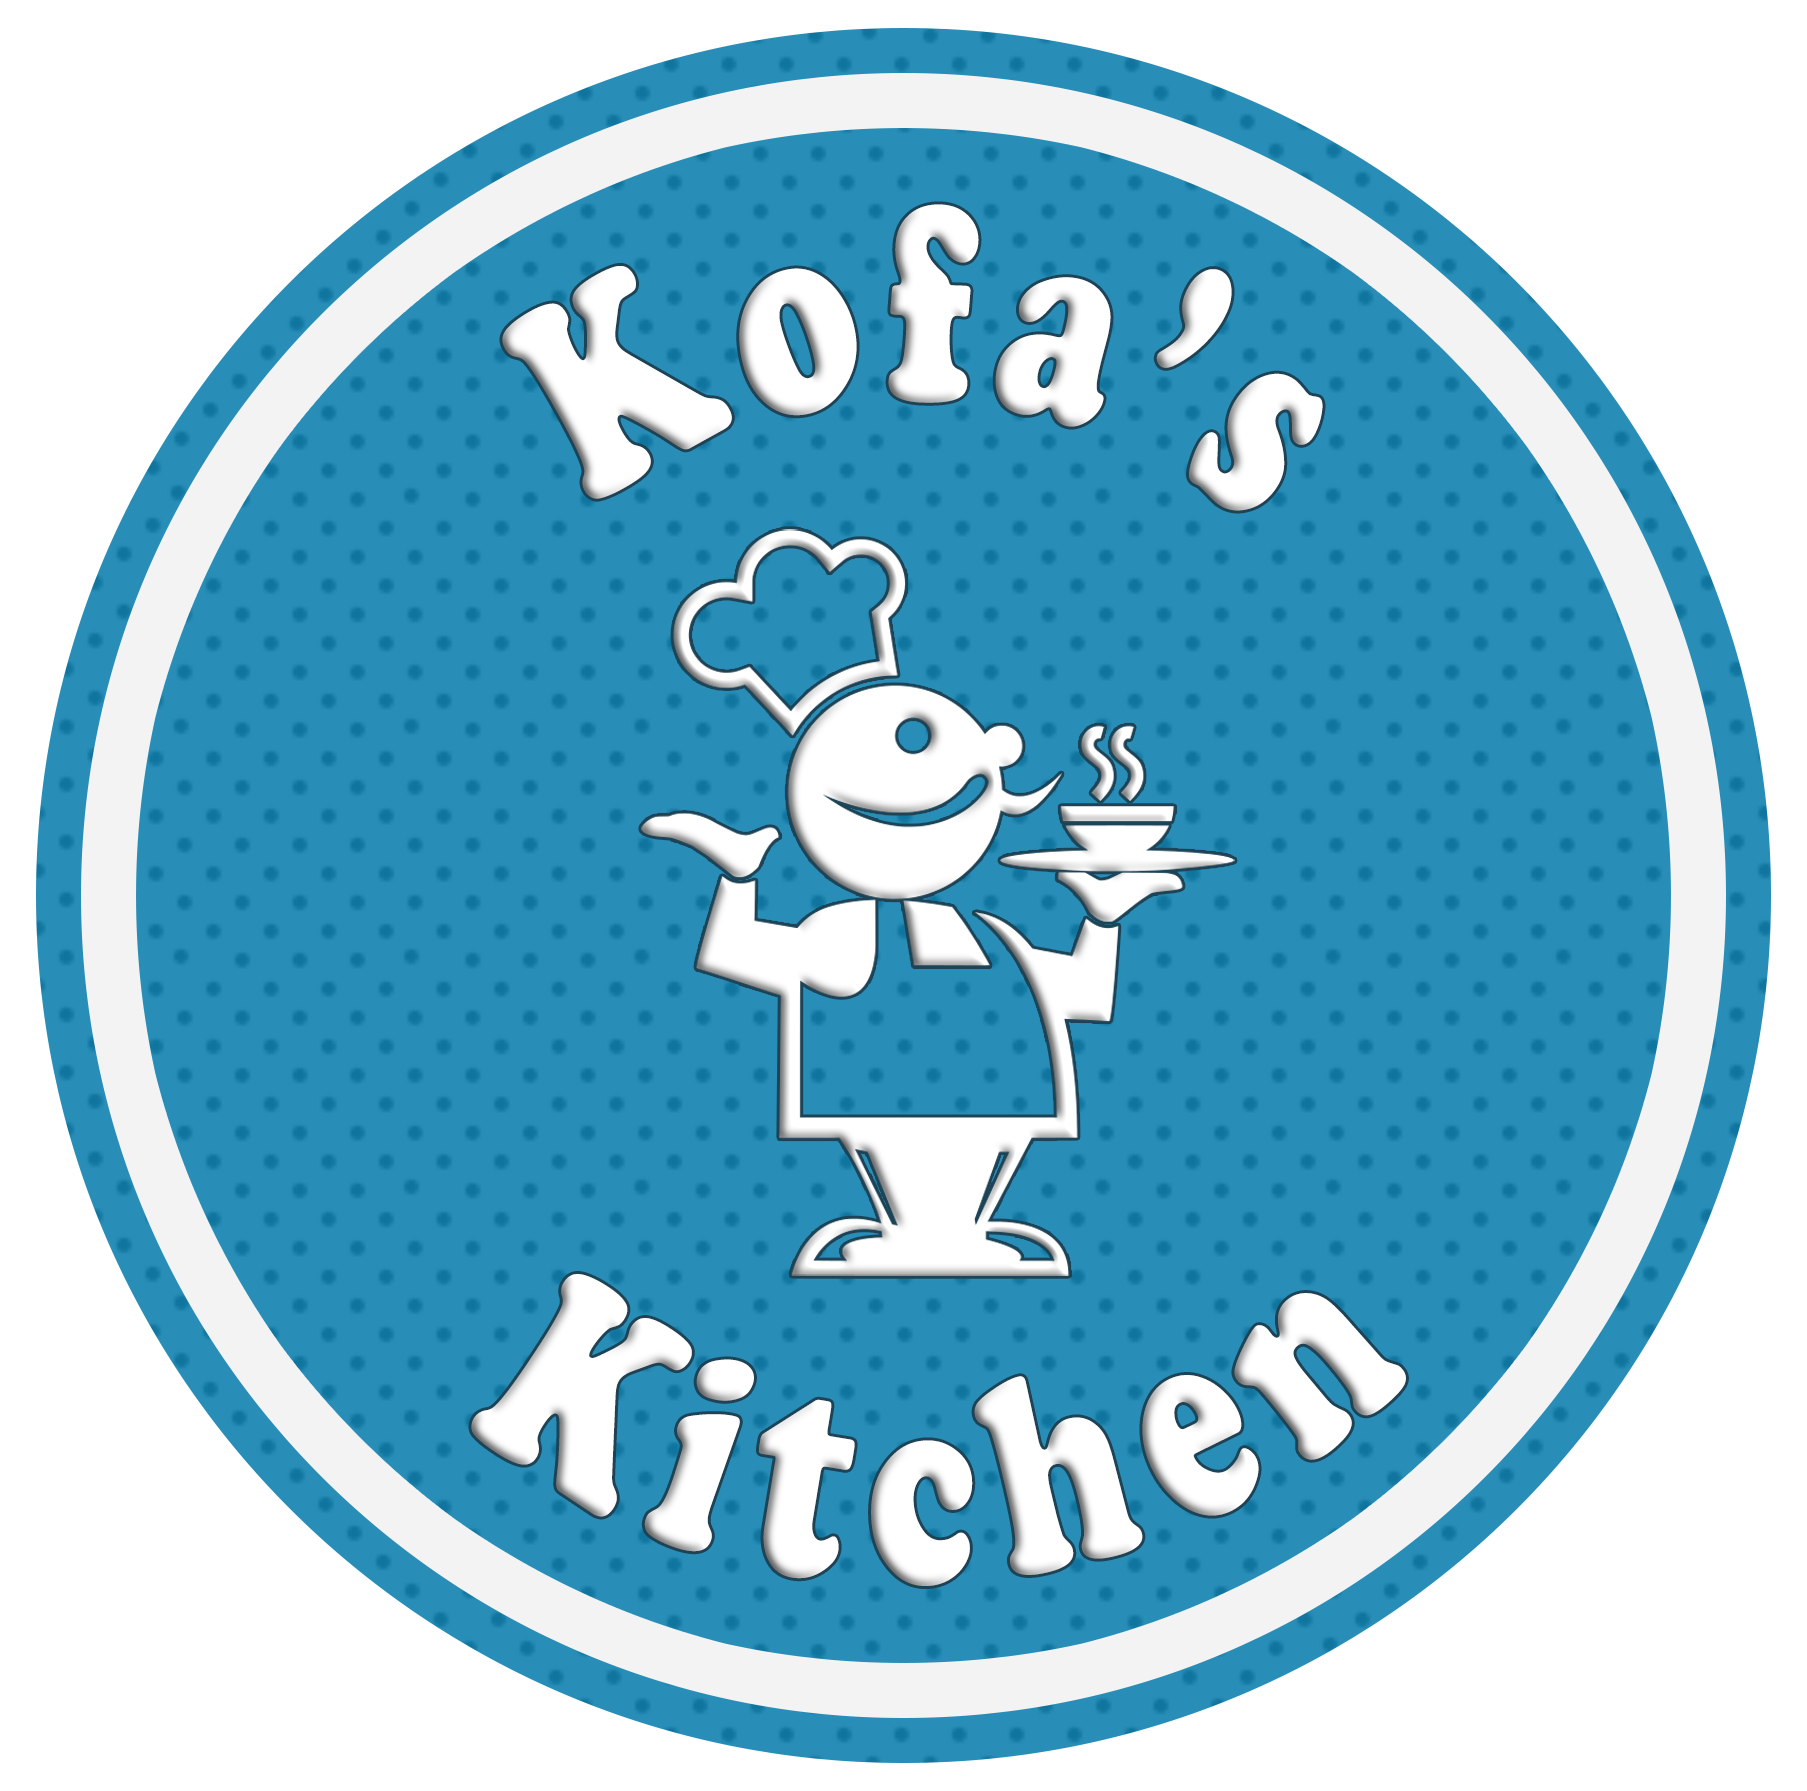 Kofa's Kitchen